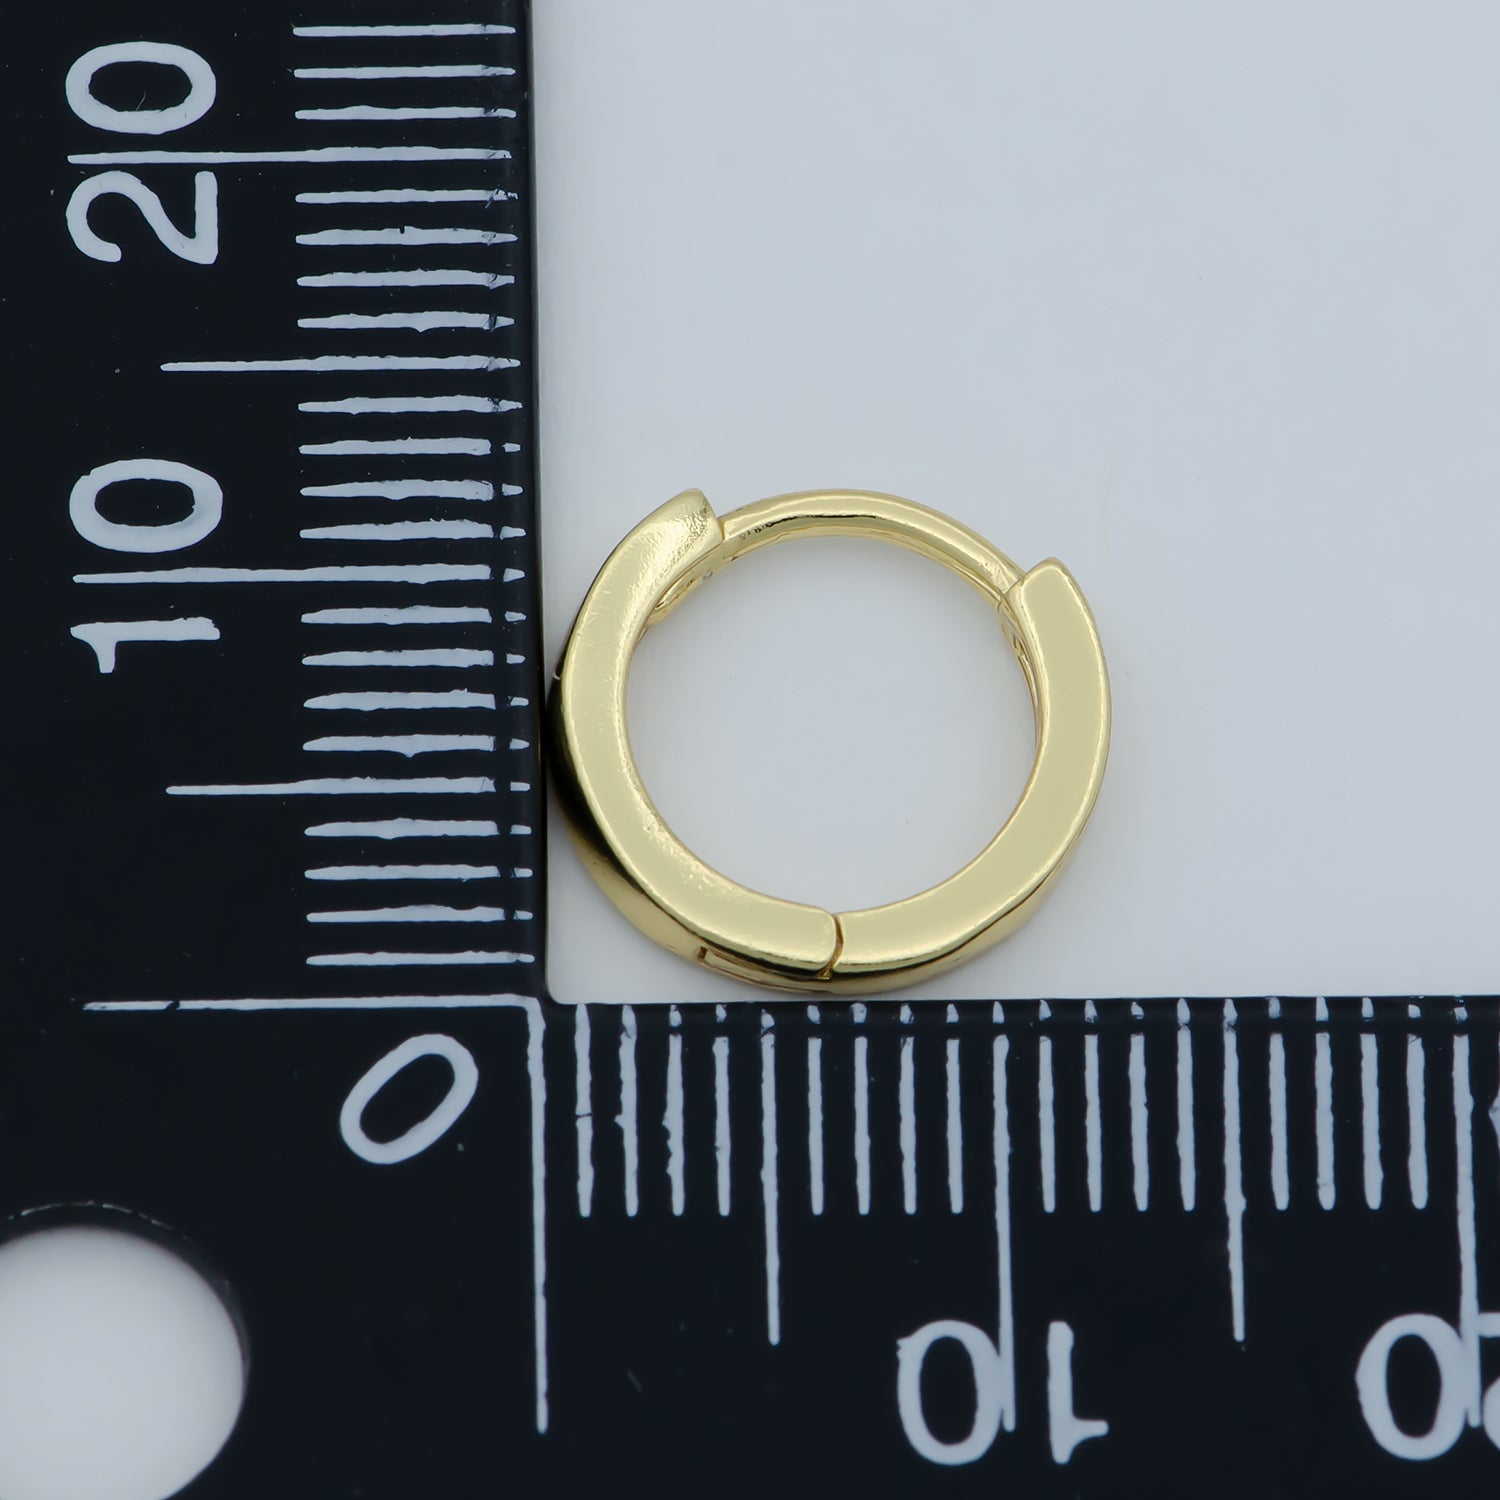 12mm Mini Cartilage Gold Filled Flat Huggie Earrings | Leo-834 - DLUXCA